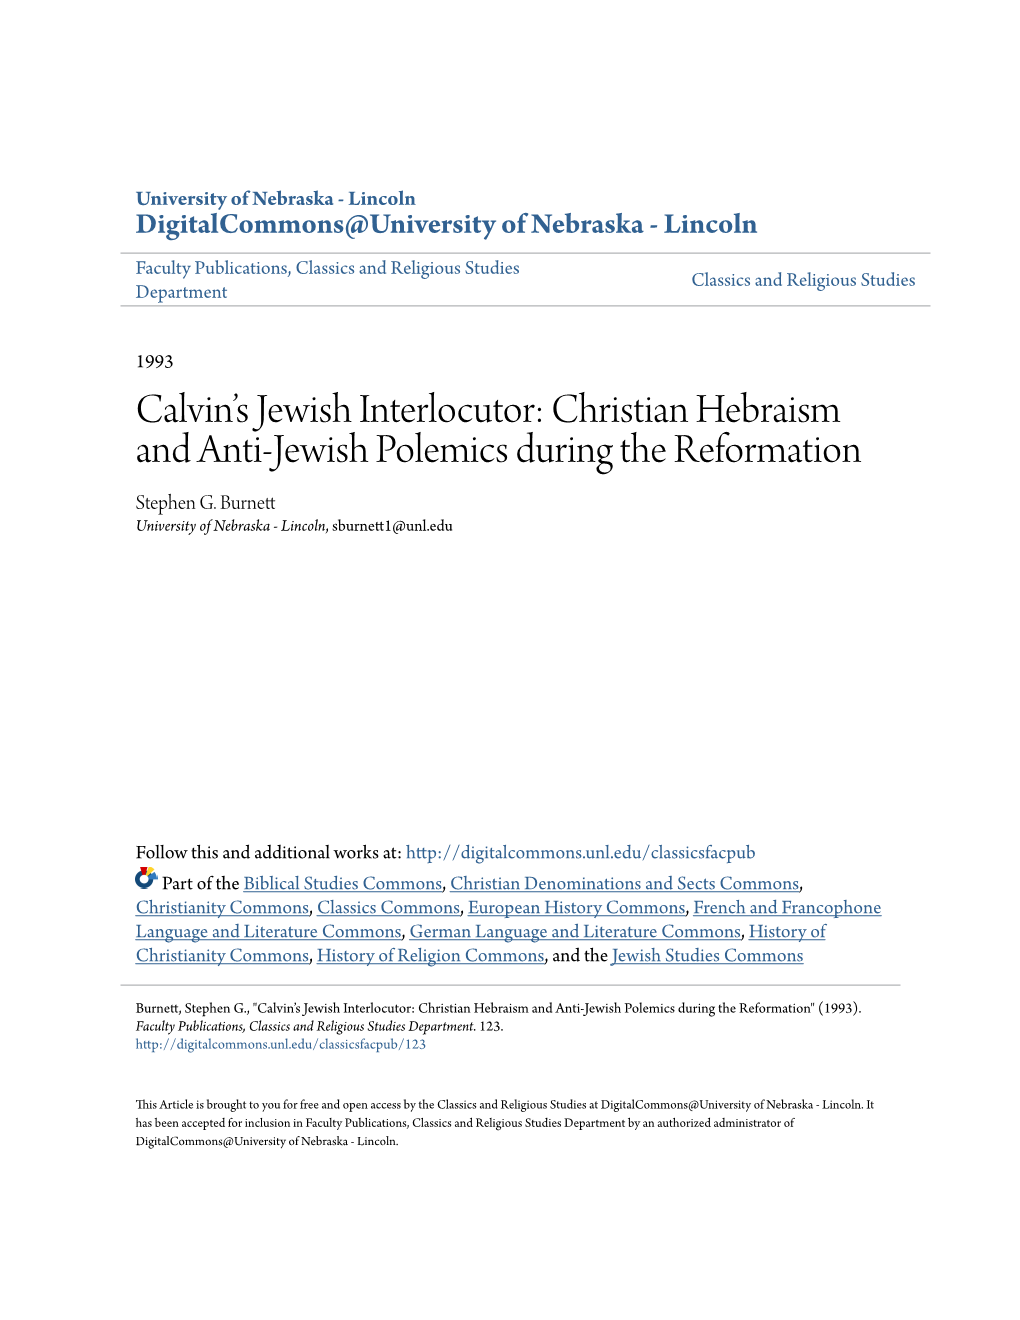 Calvin's Jewish Interlocutor: Christian Hebraism and Anti-Jewish Polemics During the Reformation